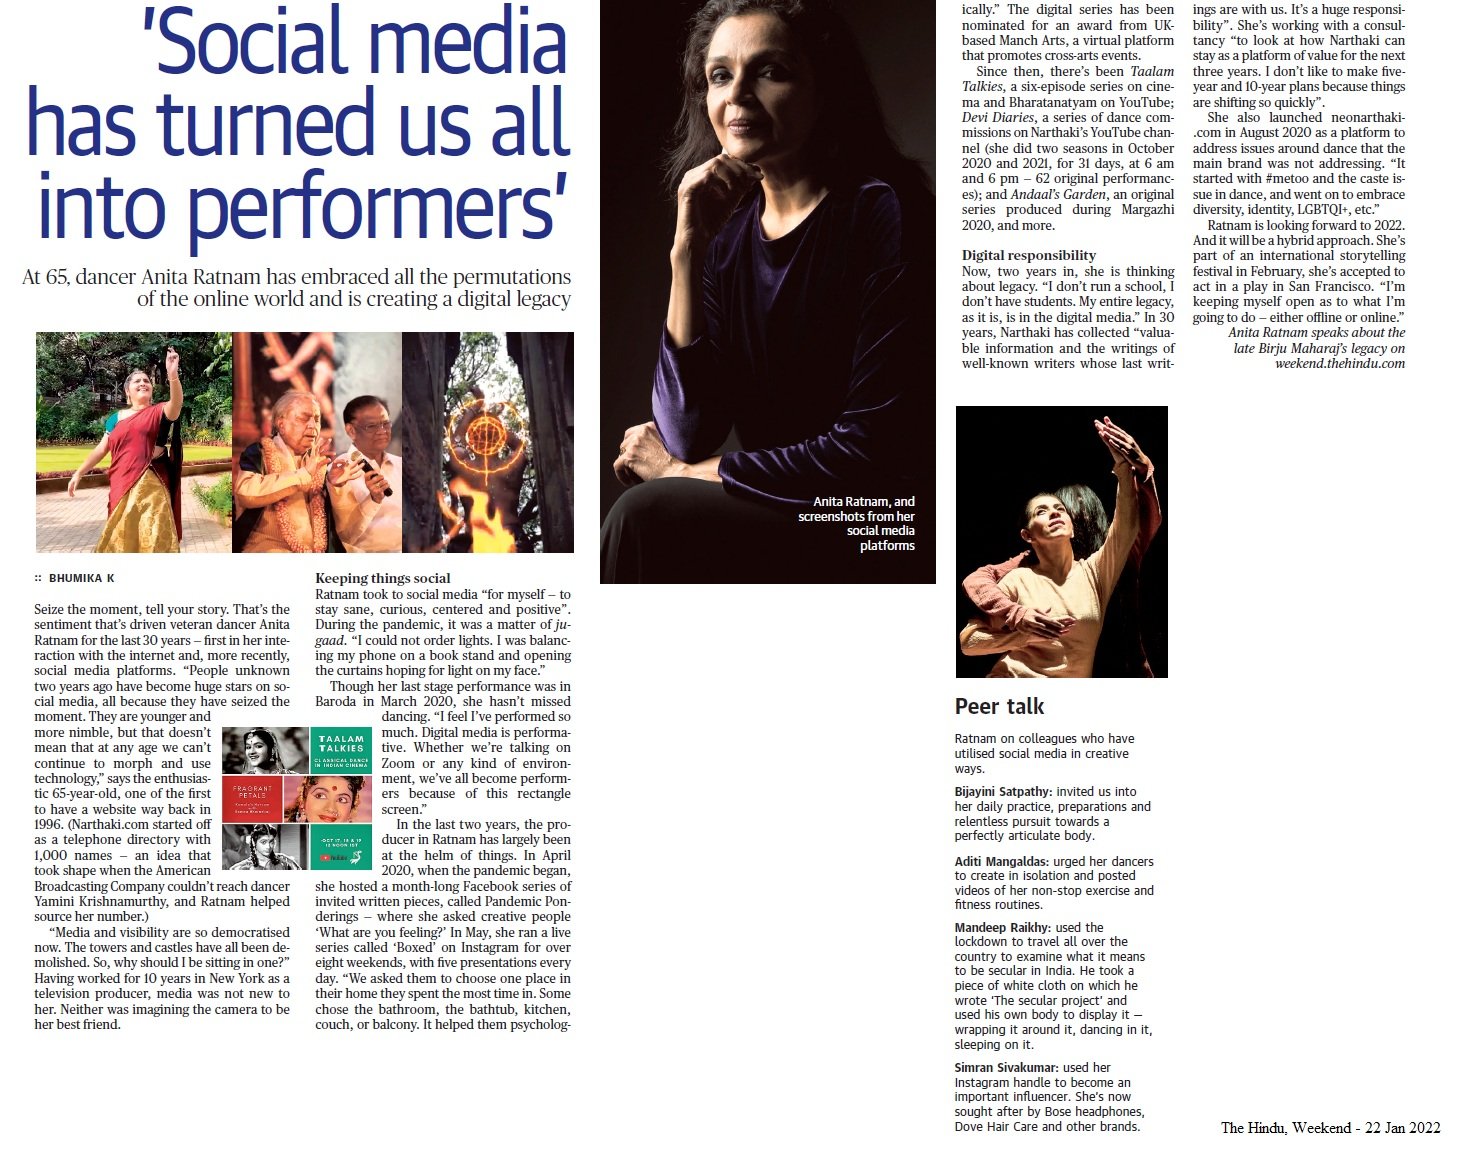 Social media has turned us all into performers - K Bhumika